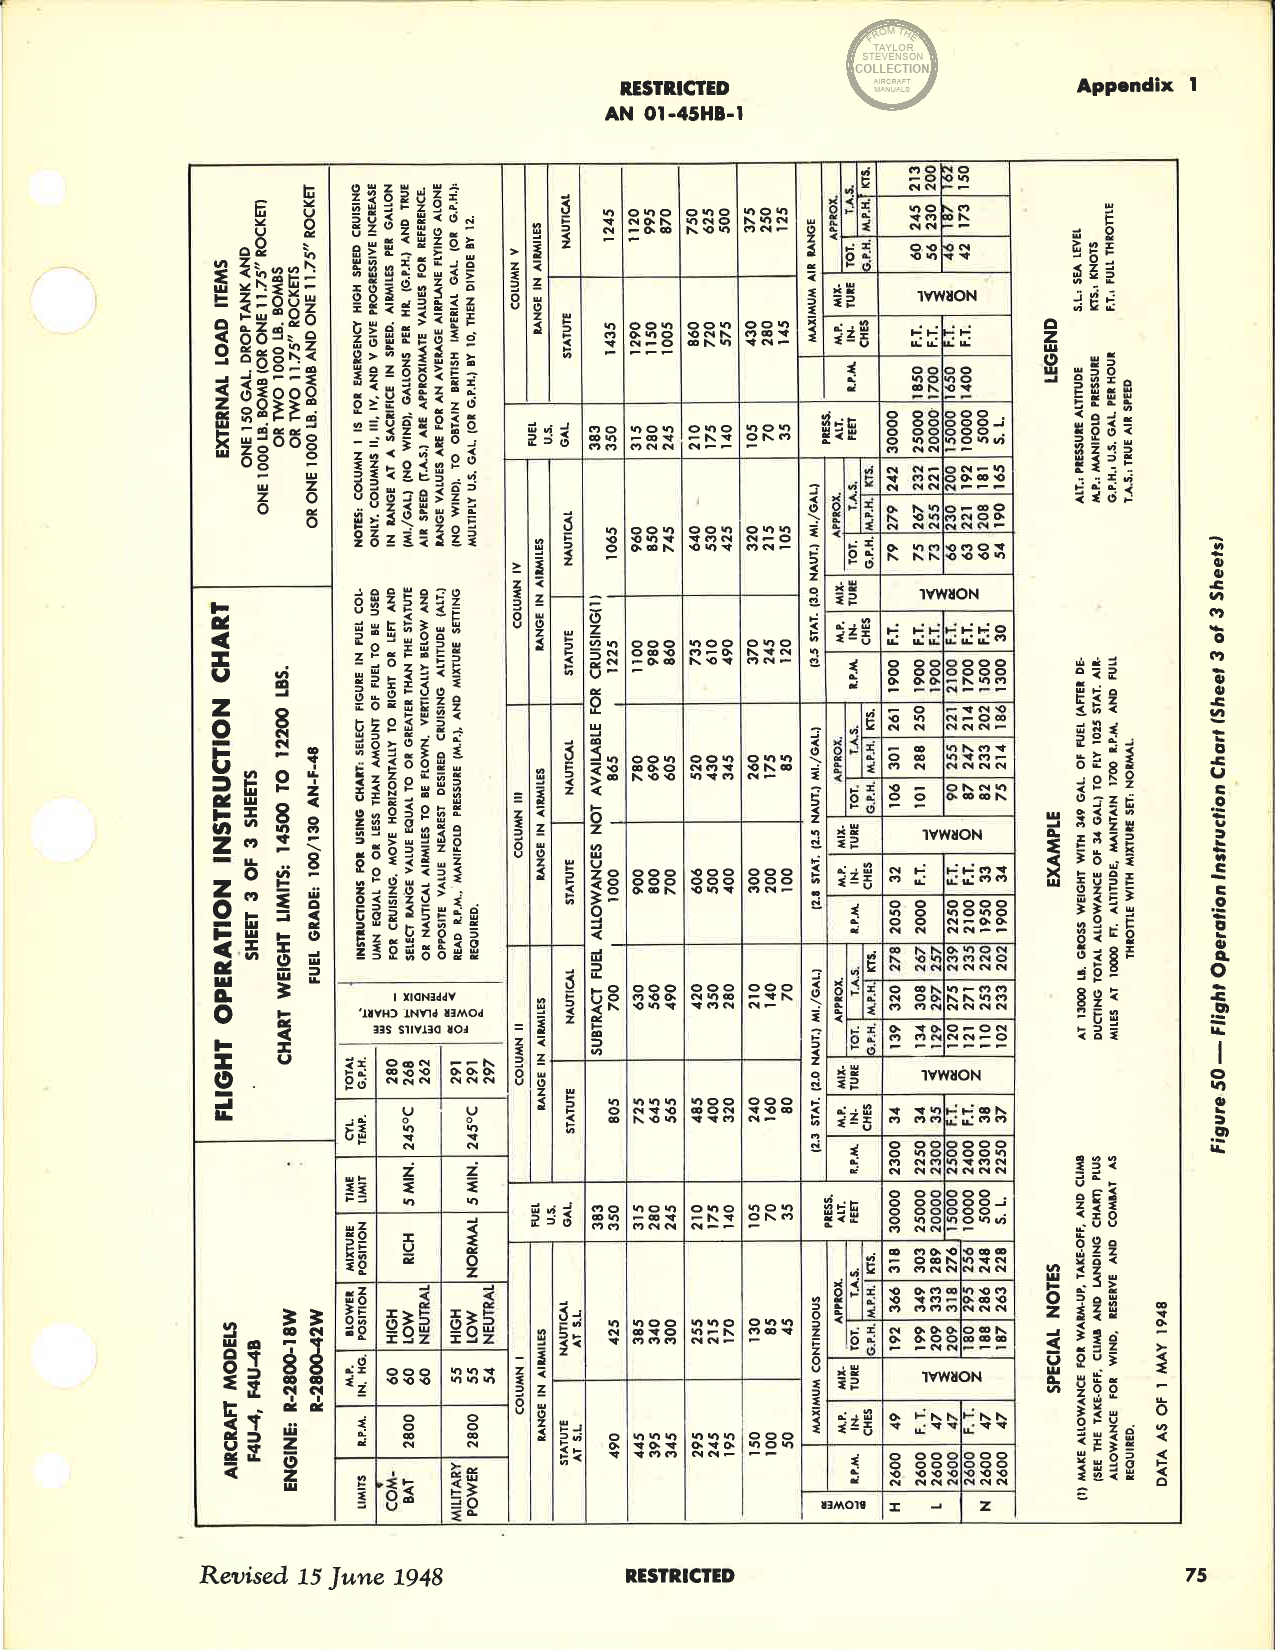 Sample page 82 from AirCorps Library document: Pilot's Handbook - Corsair - F4U-4 F4U-4B